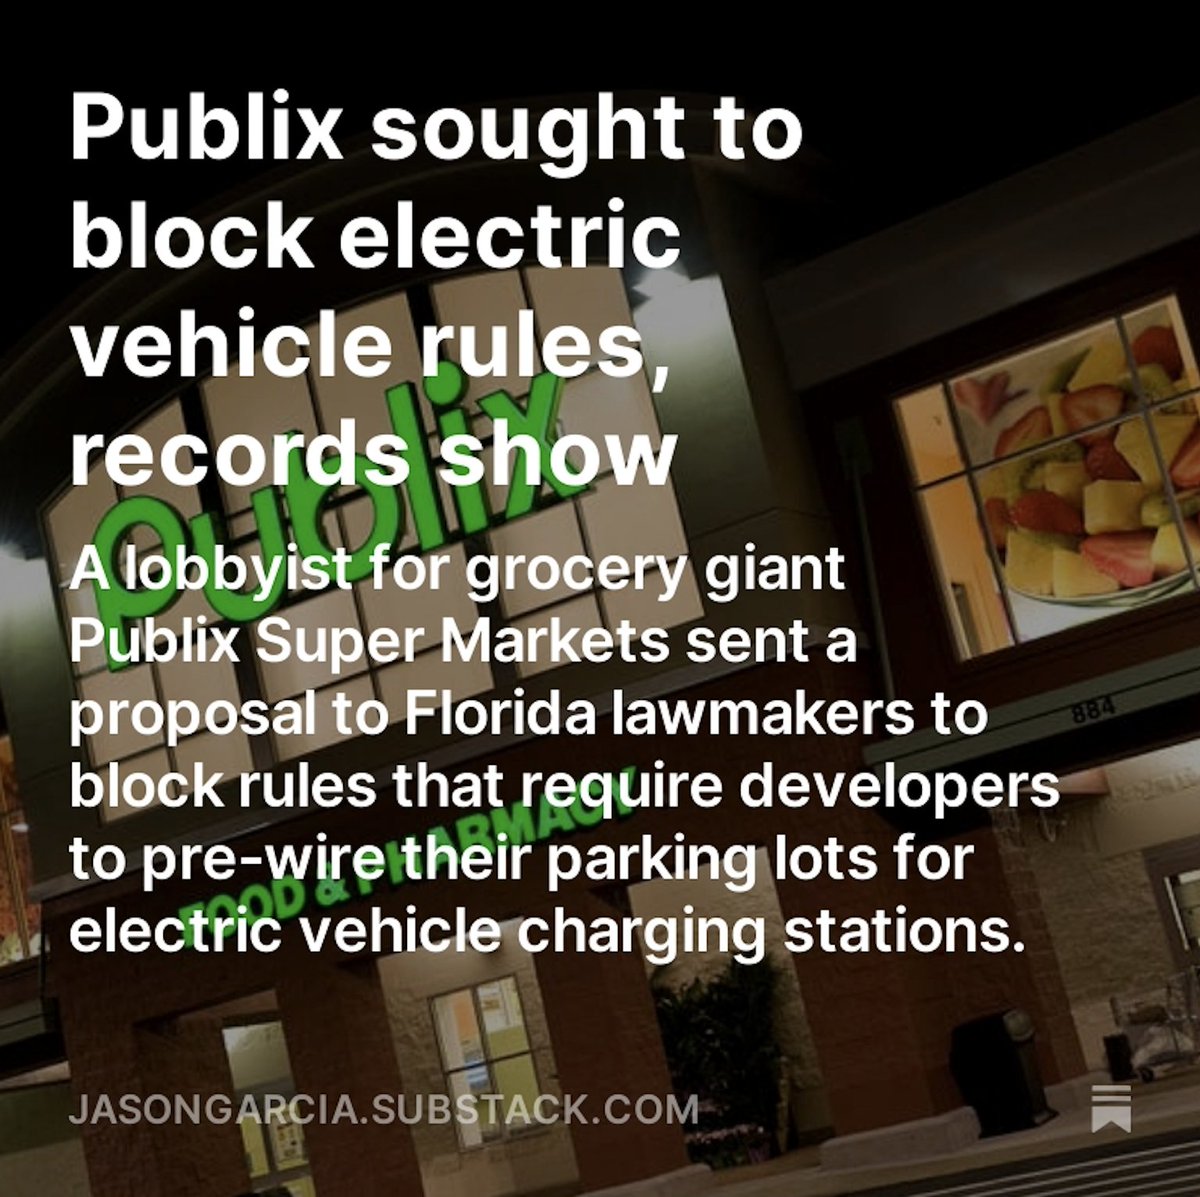 New: Publix sought to block electric vehicle rules, records show jasongarcia.substack.com/p/publix-sough…